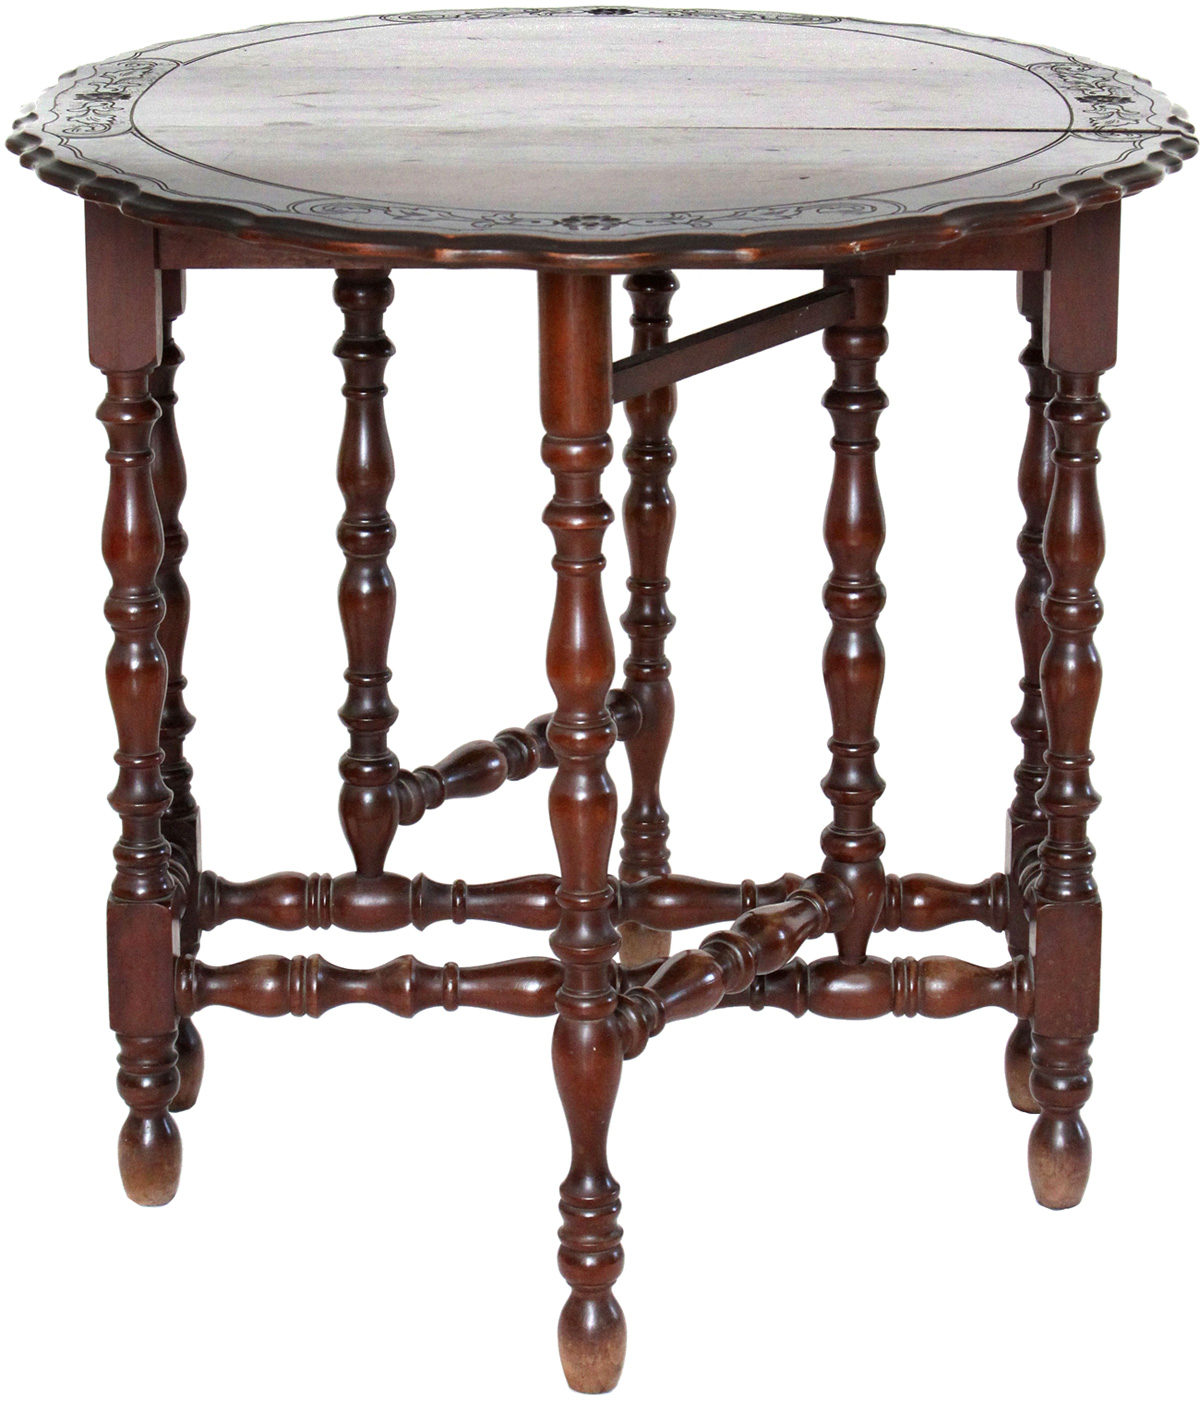 Antique Victorian gate-leg table - שולחן גייטלג ויקטוריאני עתיק - Back To List of Antique English Furniture